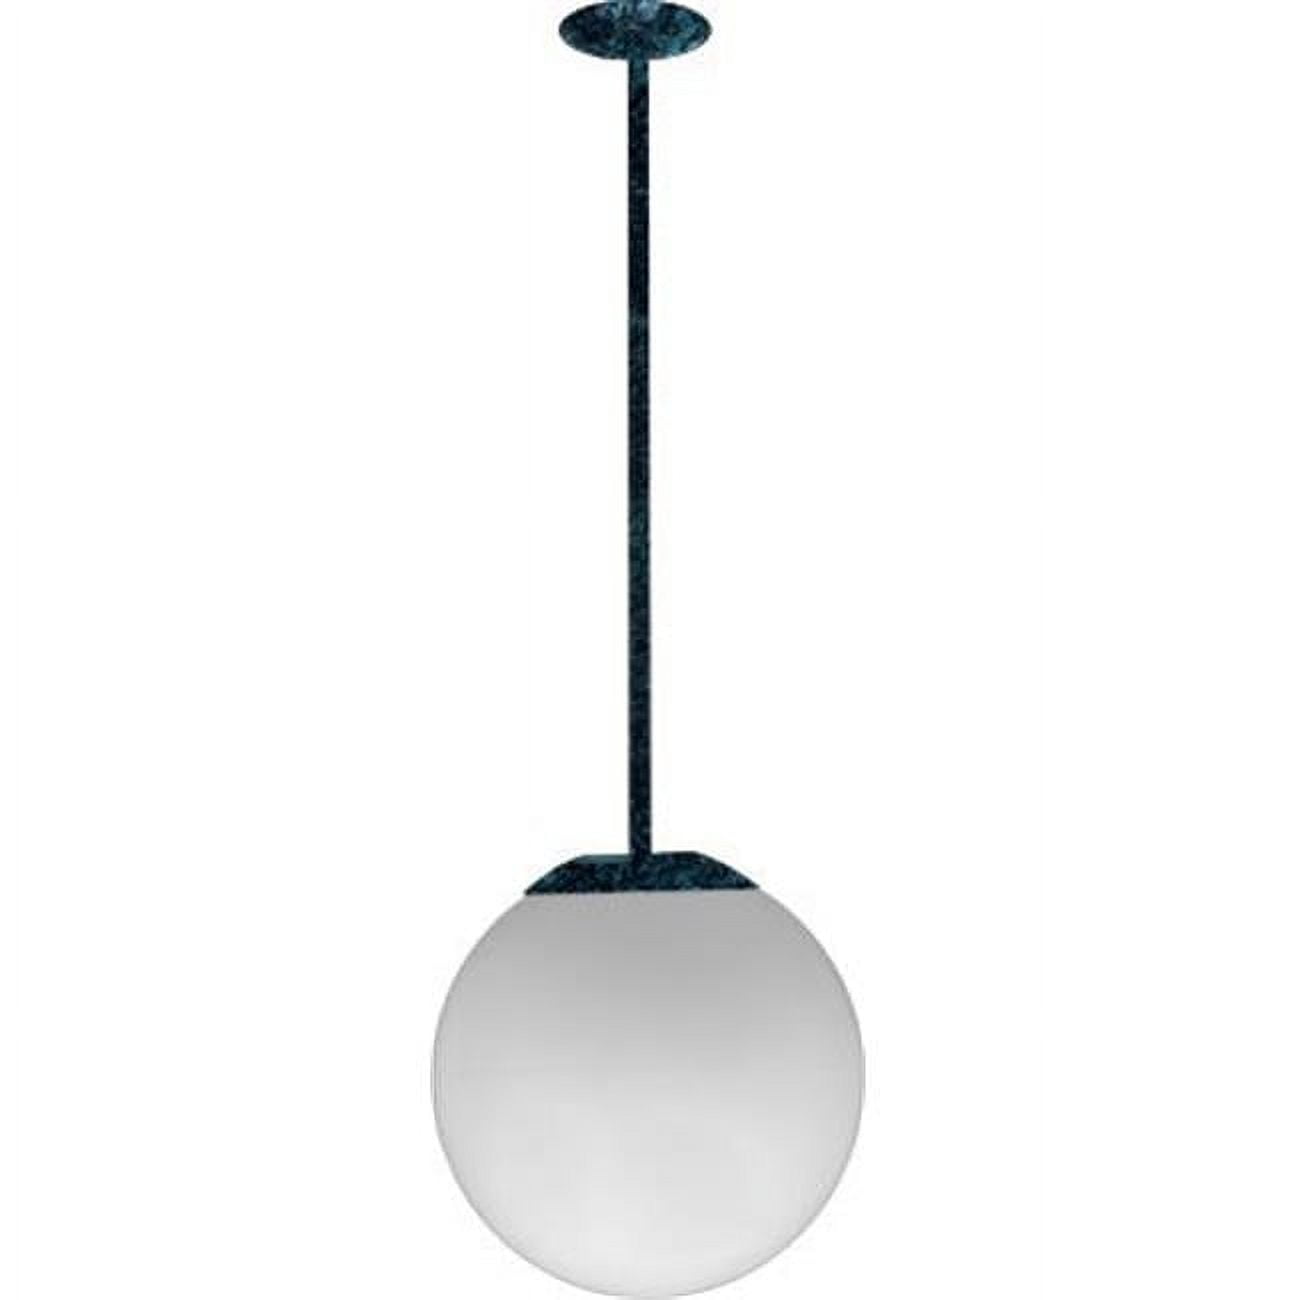 D7515-24-vg 16 In. 120 V 50 Watts Ceiling Globe Fixture 24 In. Drop With Metal Halide Lamp, Verde Green